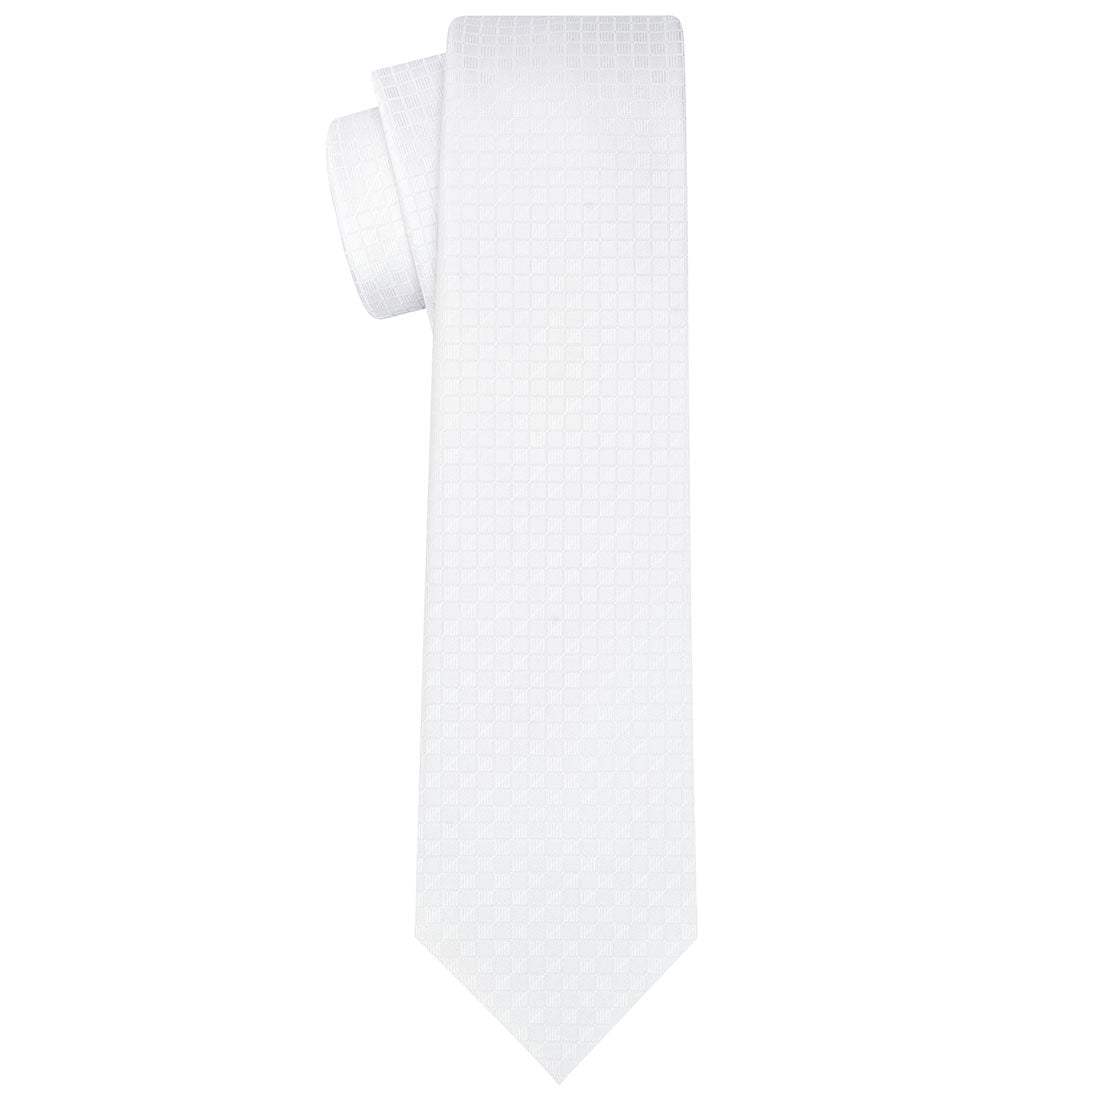 White Checkered Tie - Tie, bowtie, pocket square  | Kissties